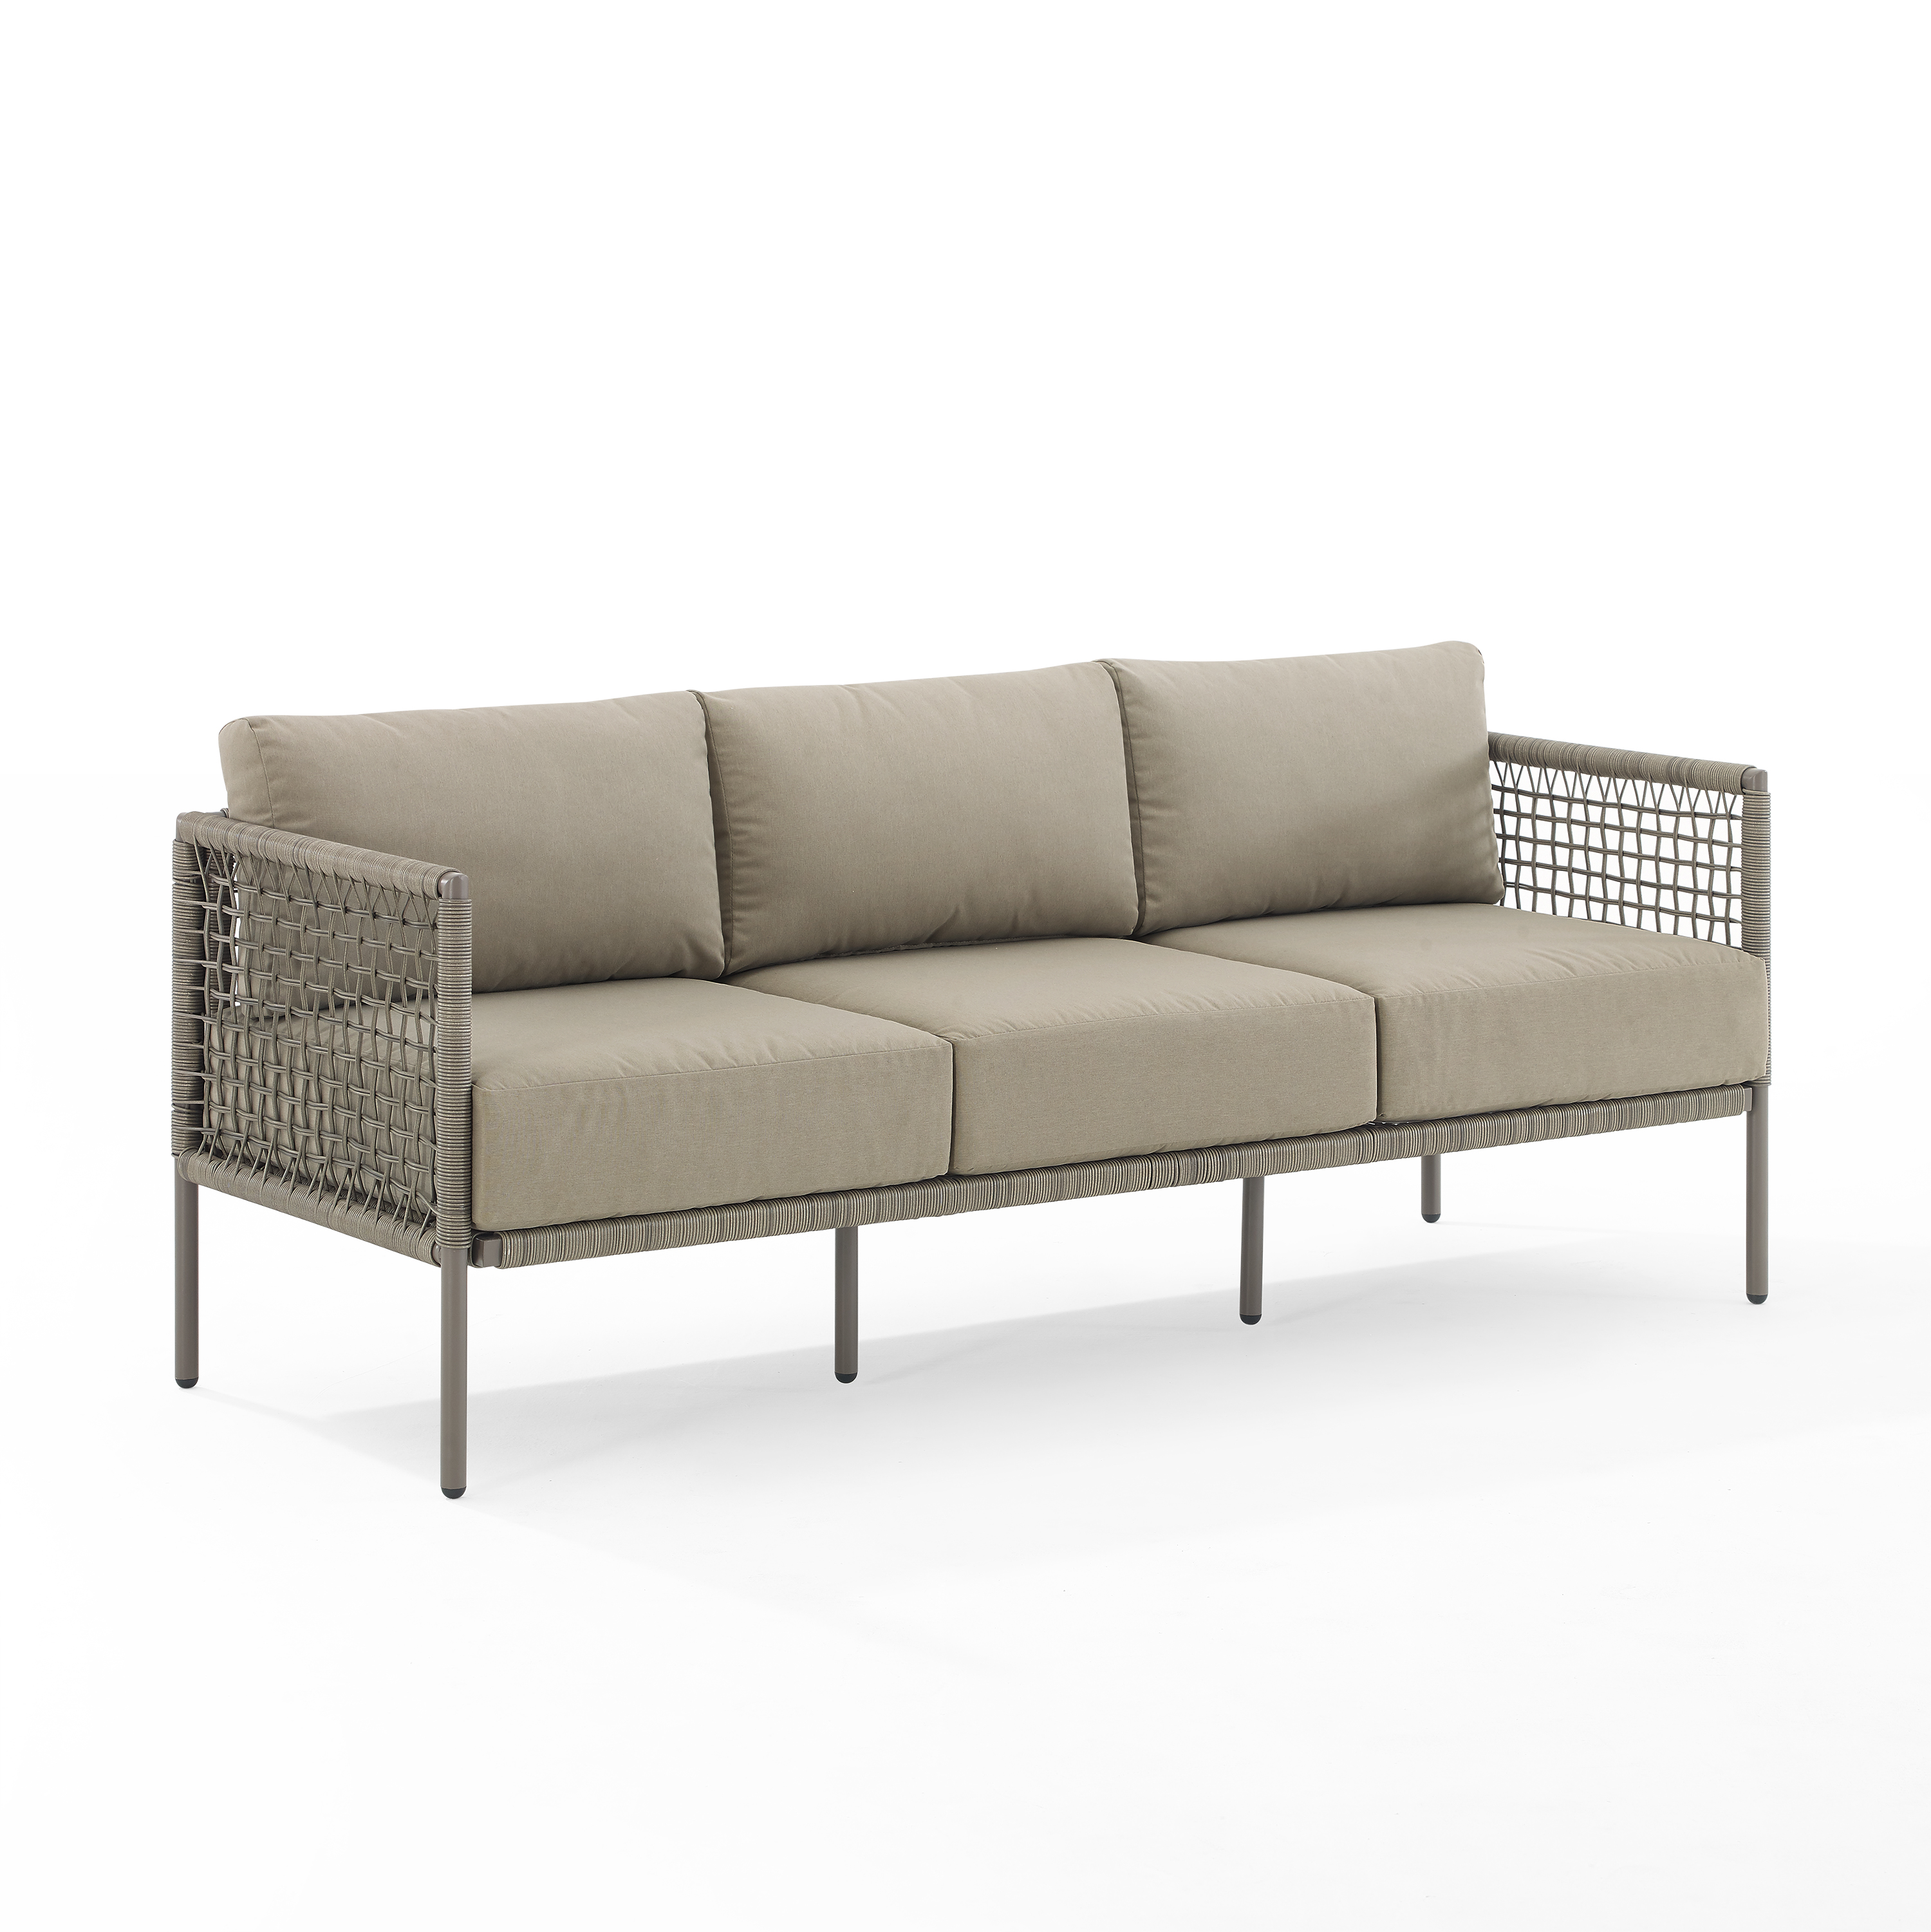 Crosley Furniture Cali Bay Modern Wicker Outdoor Sofa in Light Brown - image 1 of 11